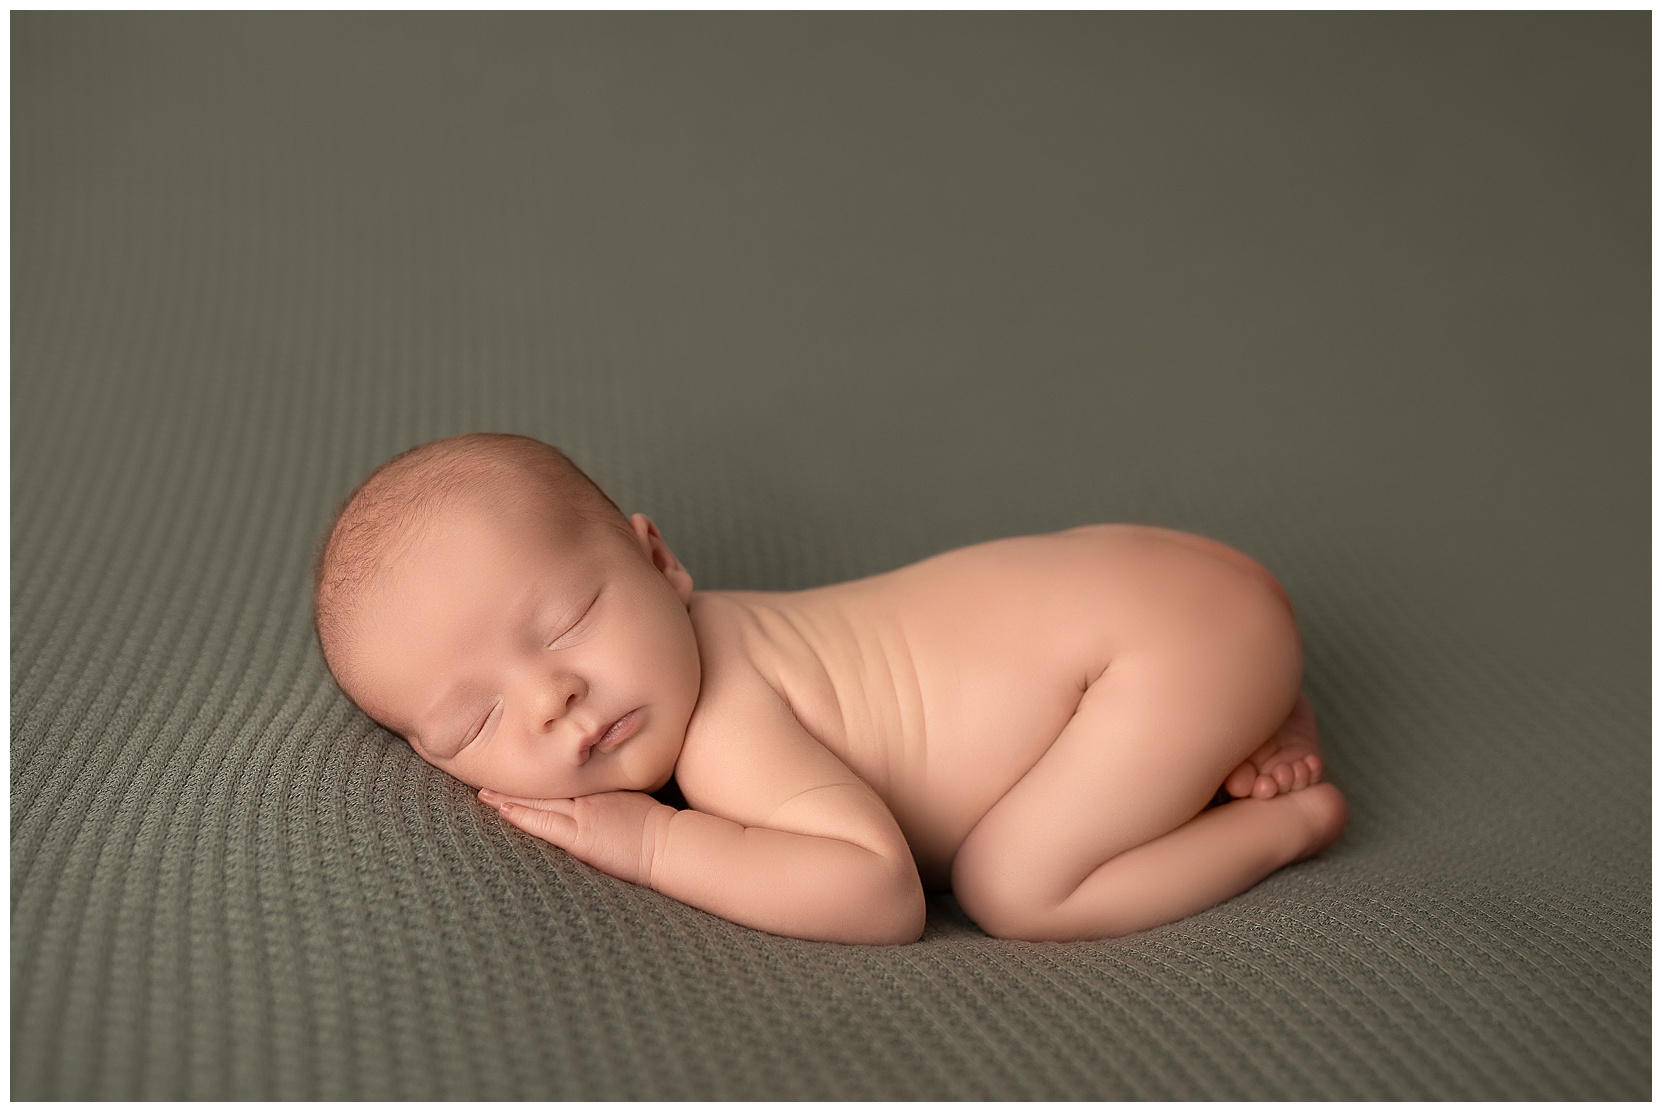 naked newborn sleeping on a green blanket